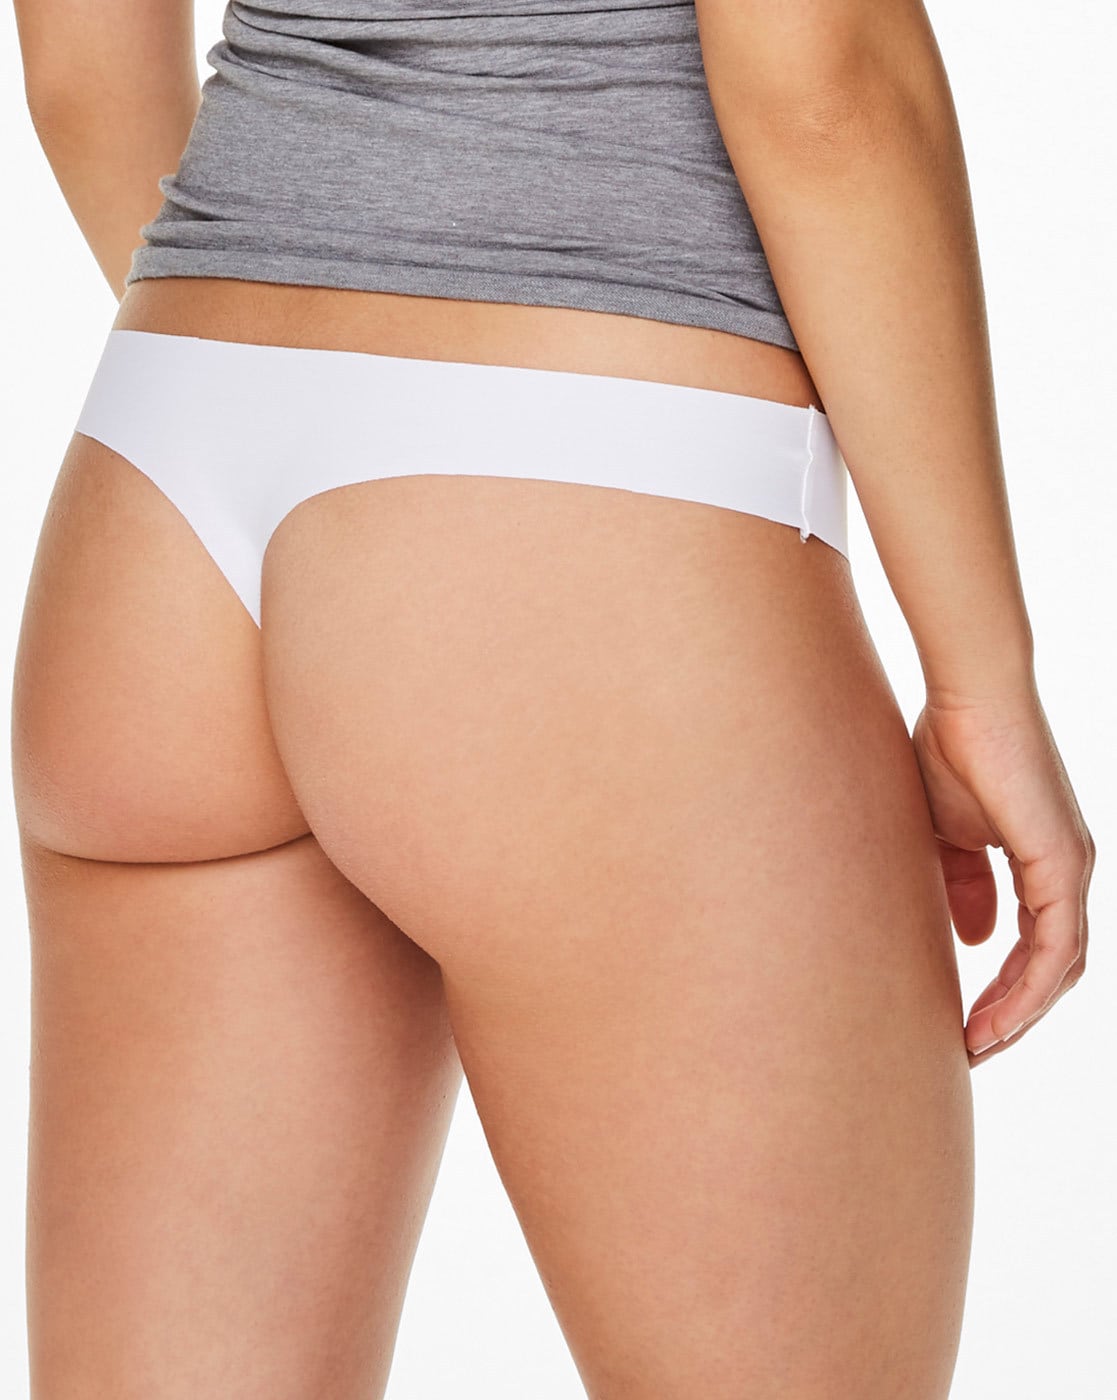 Buy Hunkemoller Amalia Super High-Leg Thong Panties, White Color Women